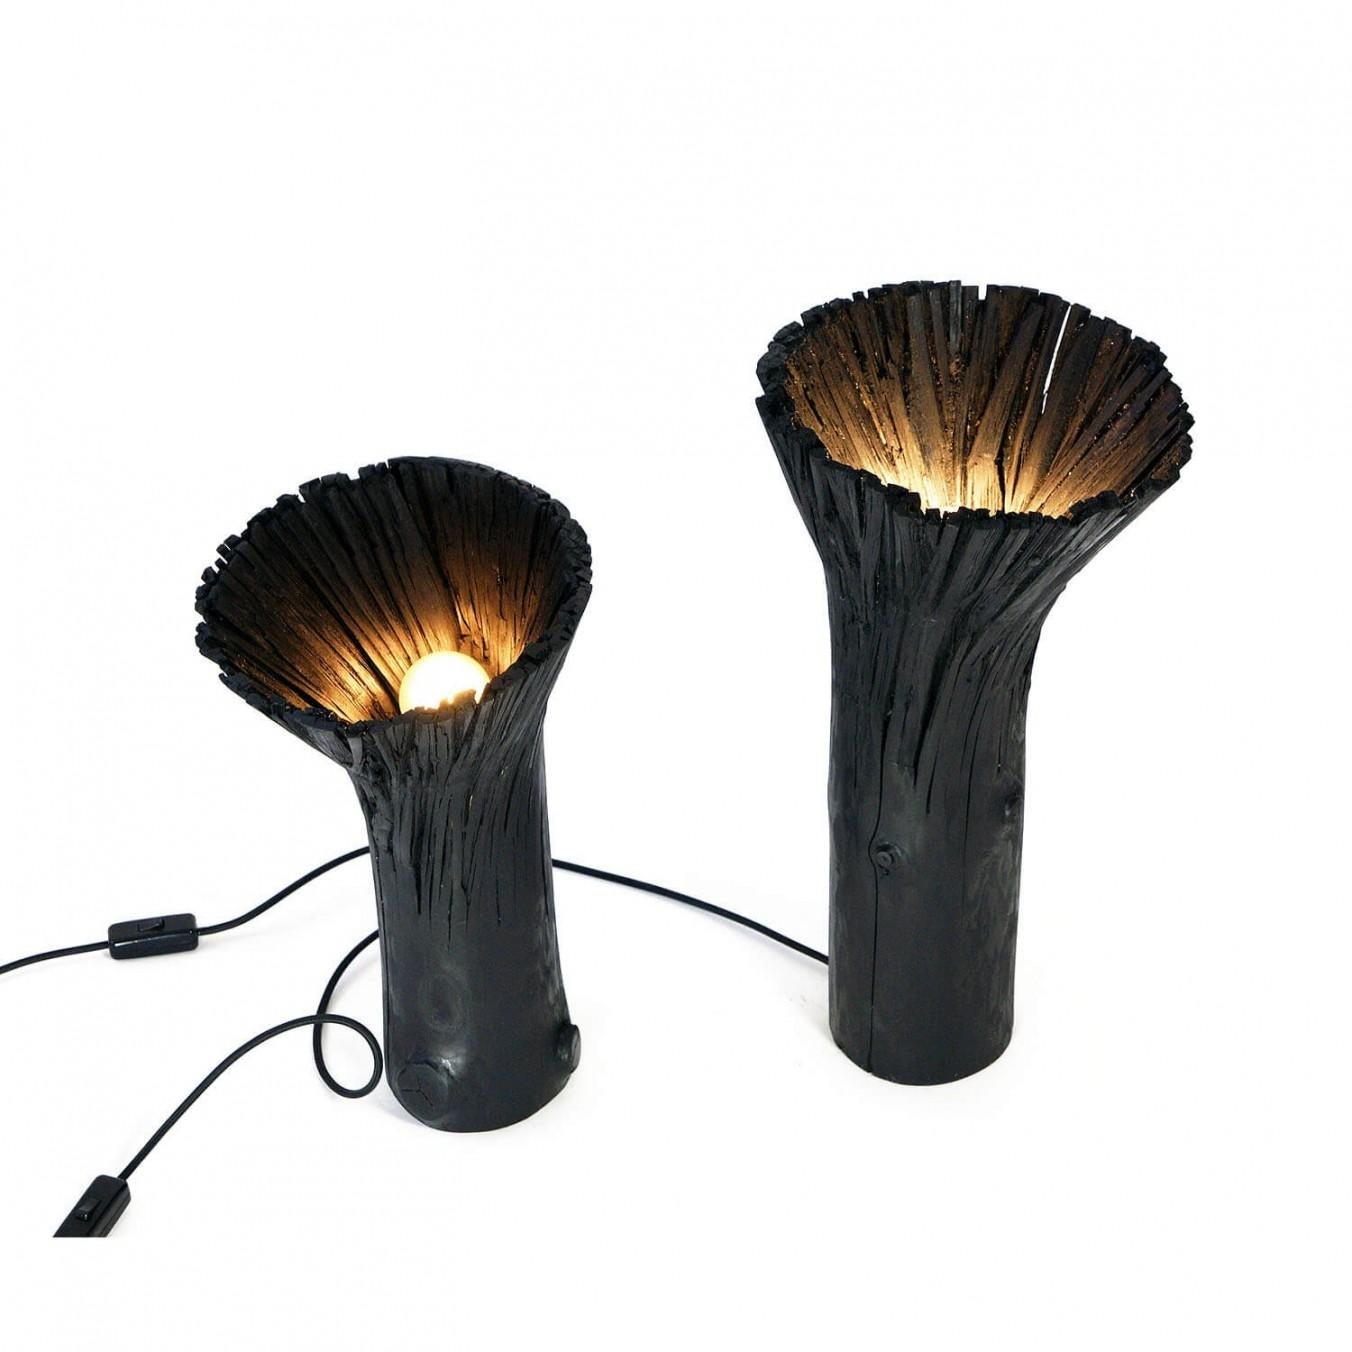 Contemporary black table lamp - pressed wood light by Johannes Hemann

Material: wood
Light source: bulb E14, max 50 Watt
Dimensions: ø35 x H478 cm

The series 